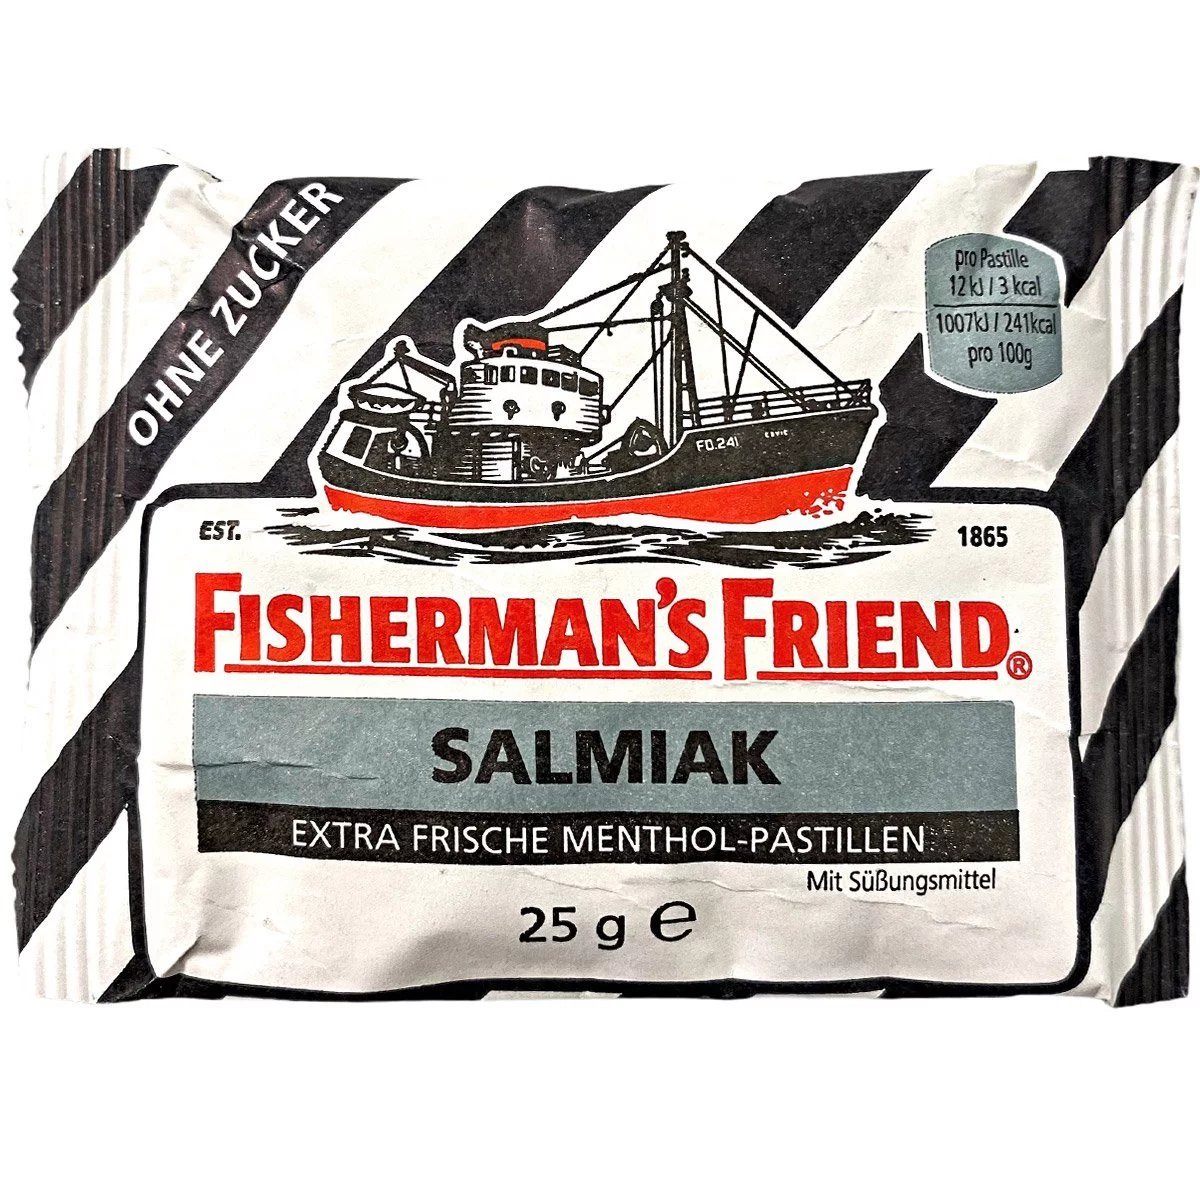 Fisherman's Friend Salmiak ohne Zucker (25g) 1